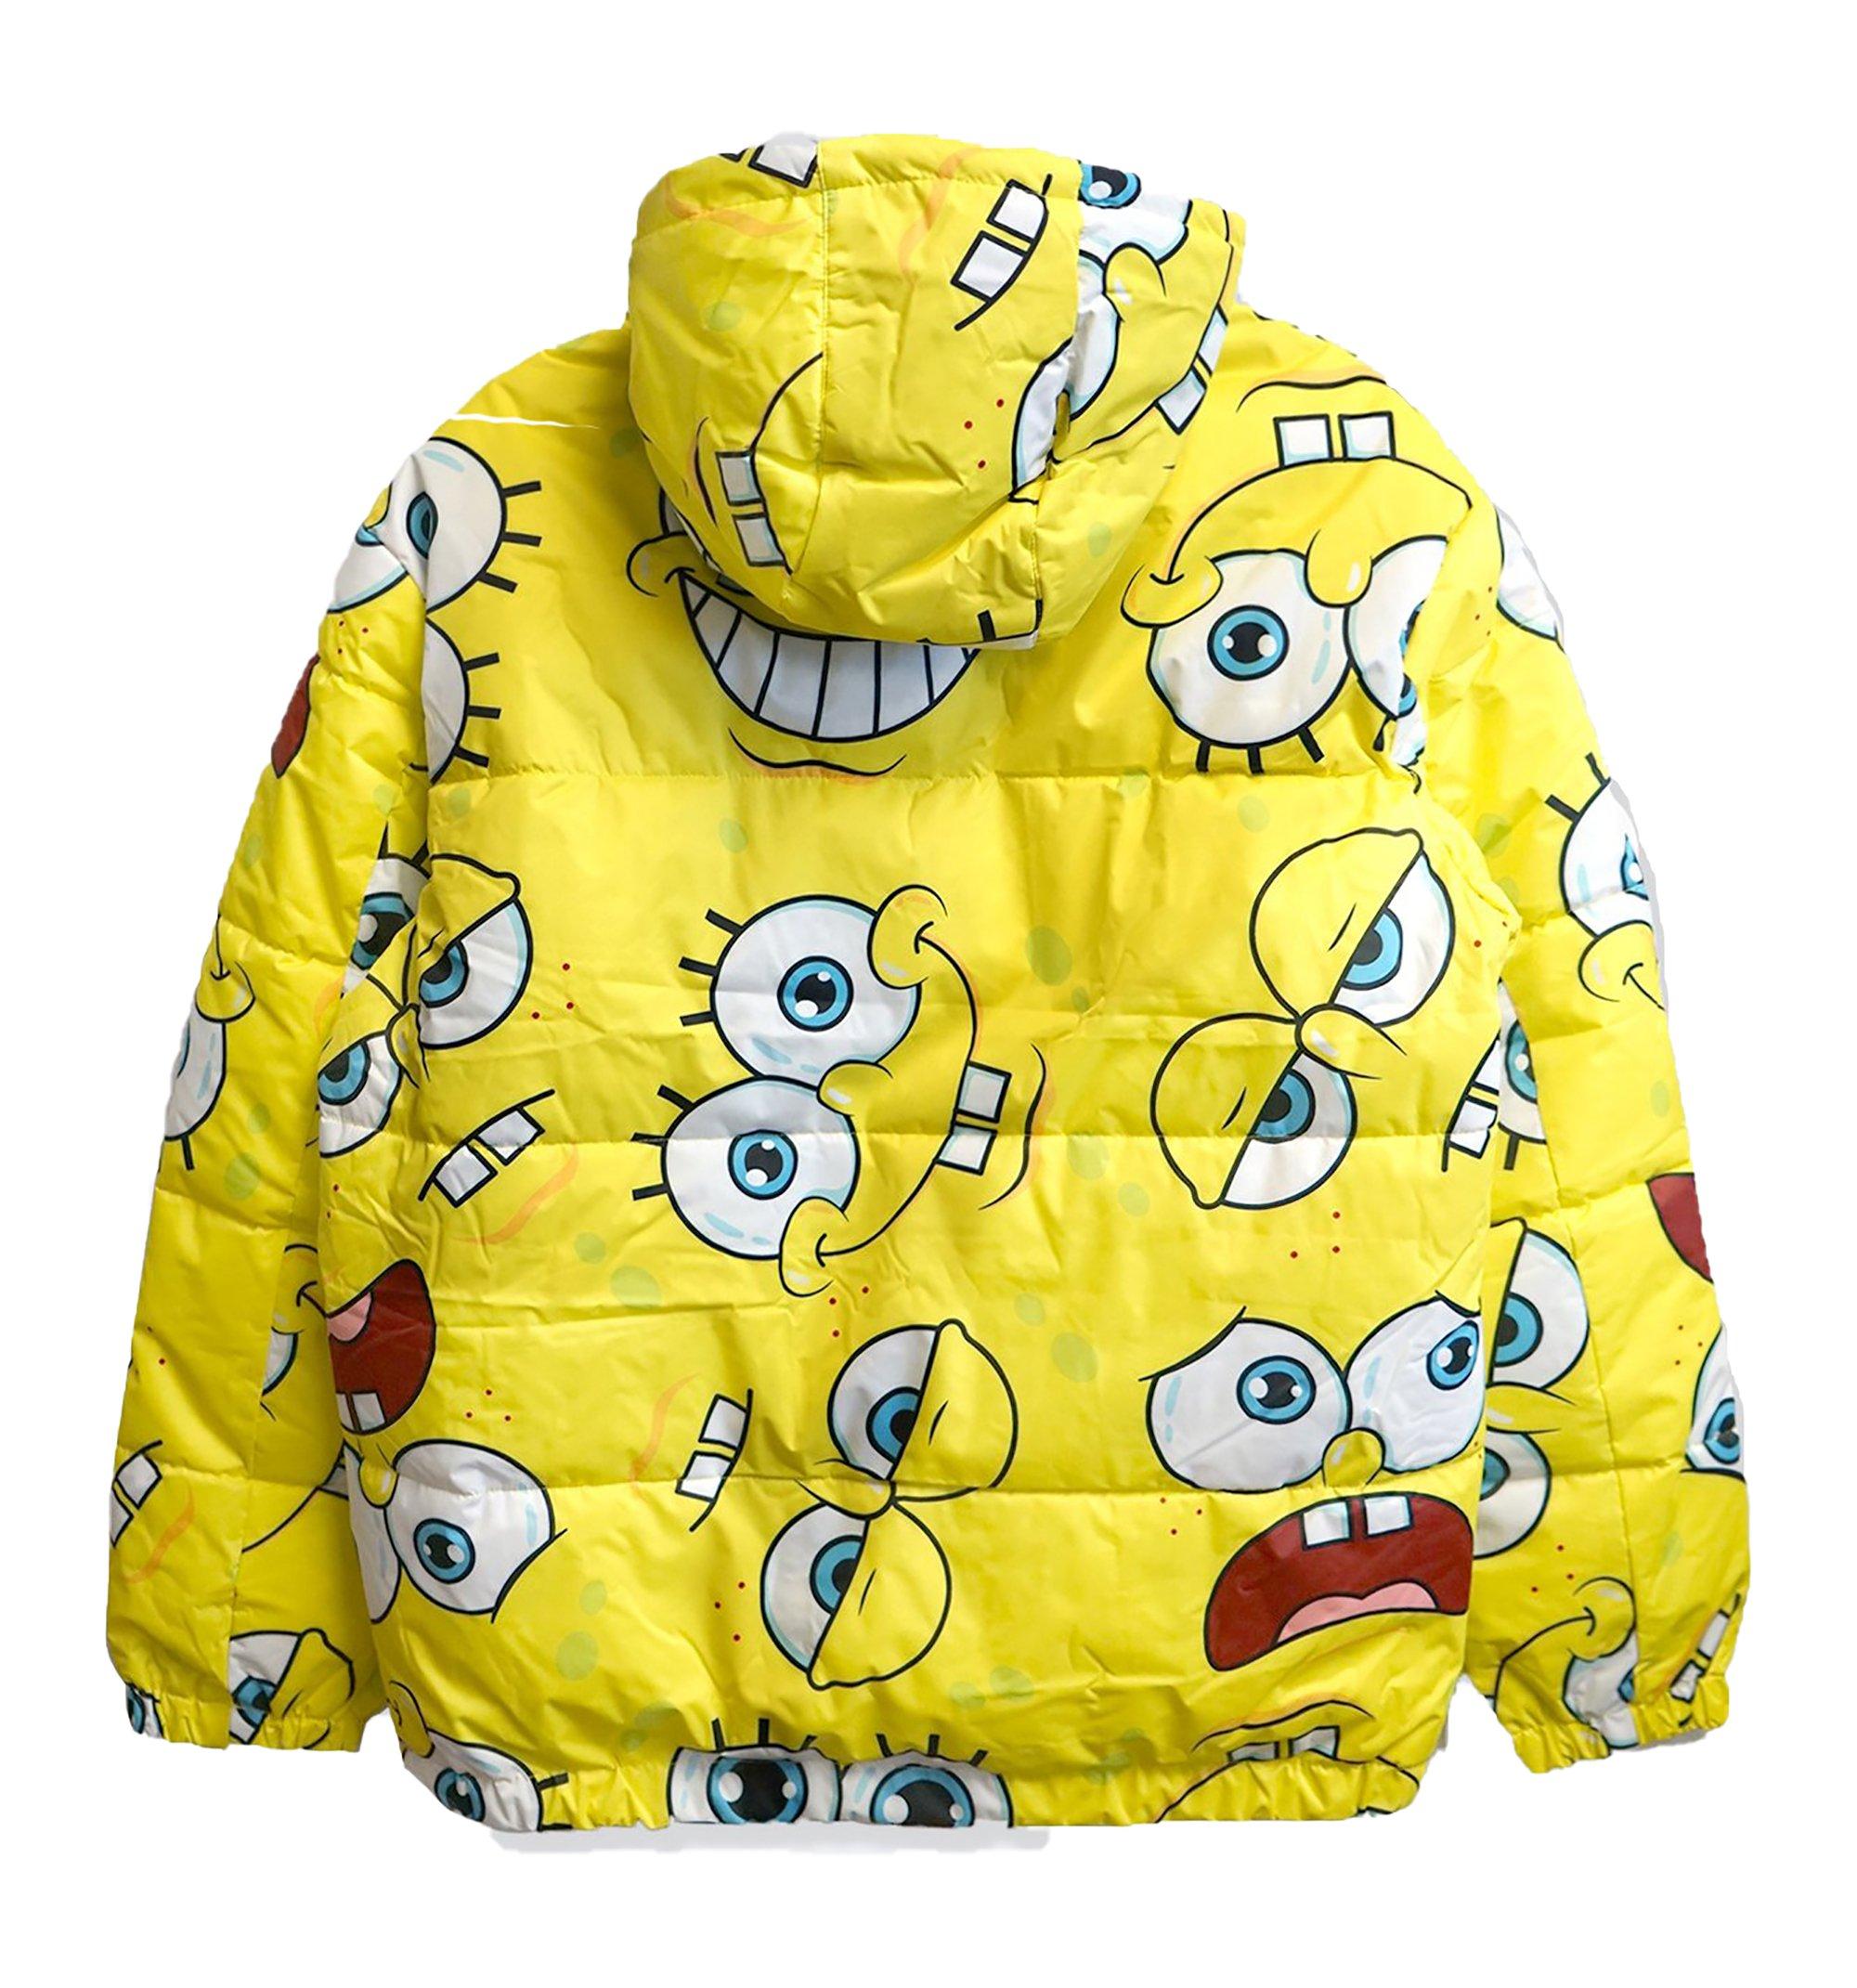 NWT Spongebob Squarepants Hooded Puffer Jacket Boy's size 8 